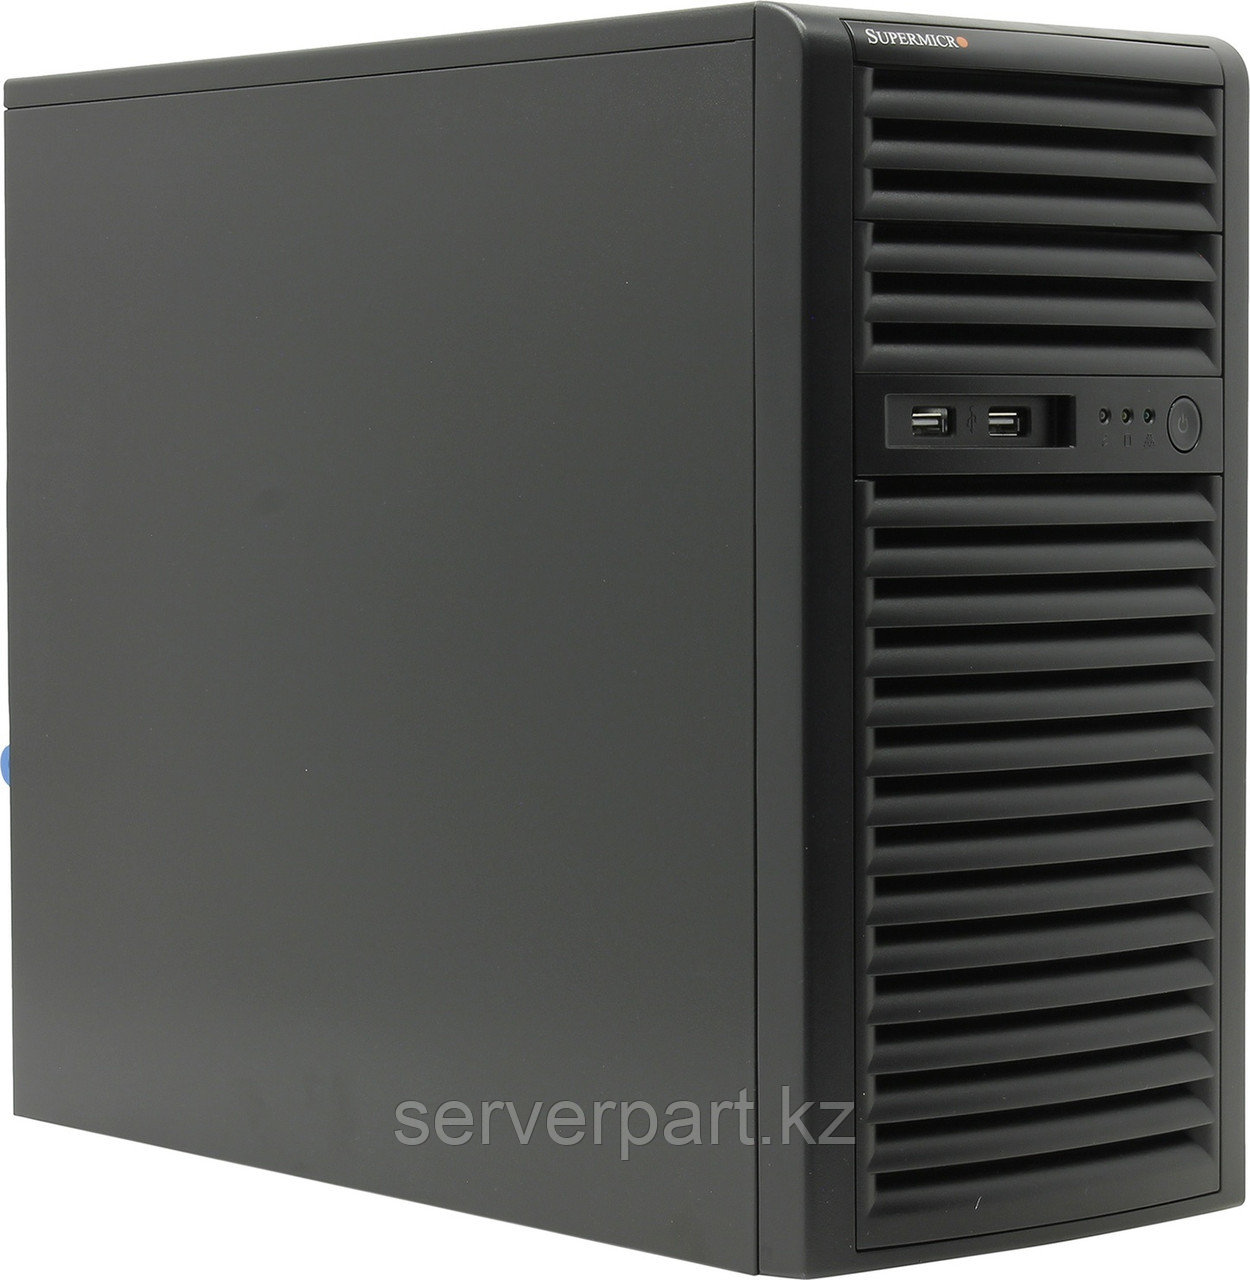 Сервер Supermicro SYS-5039D Tower 4LFF/4-core intel Xeon E3-1220v6 3GHz/48GB EUDIMM/2x480GB SSD RI Hyb